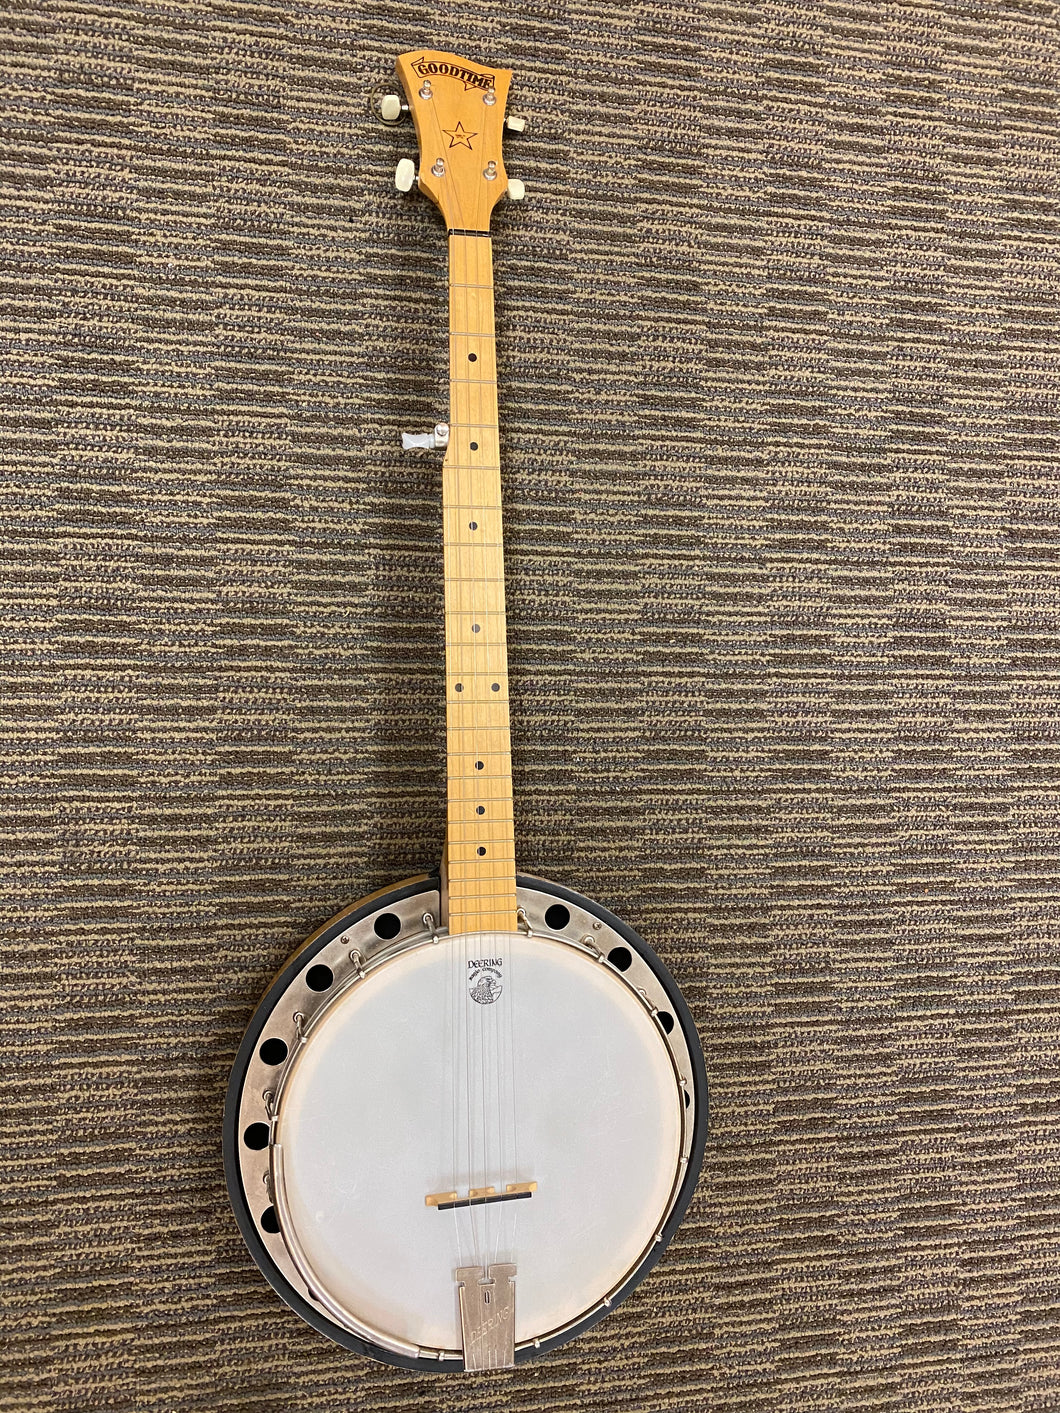 Deering goodtime 2 Resonater banjo 